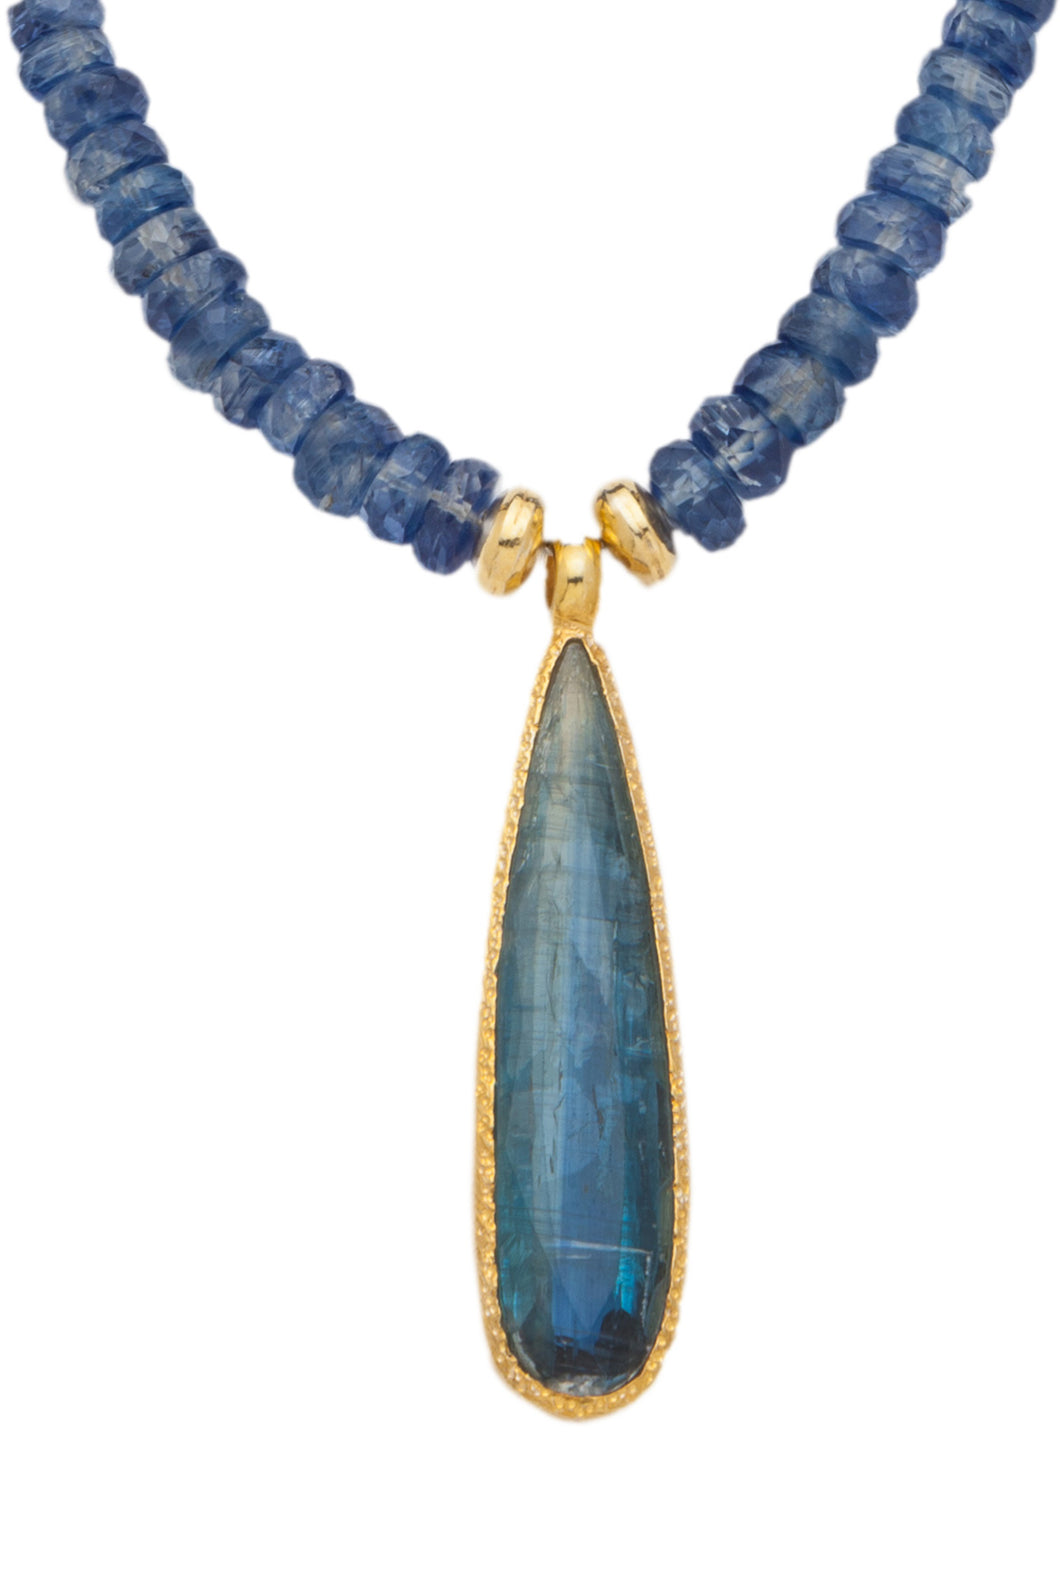 Blue Kyanite Necklace with Blue Kyanite Pendant in 24kt gold vermeil NF276-K